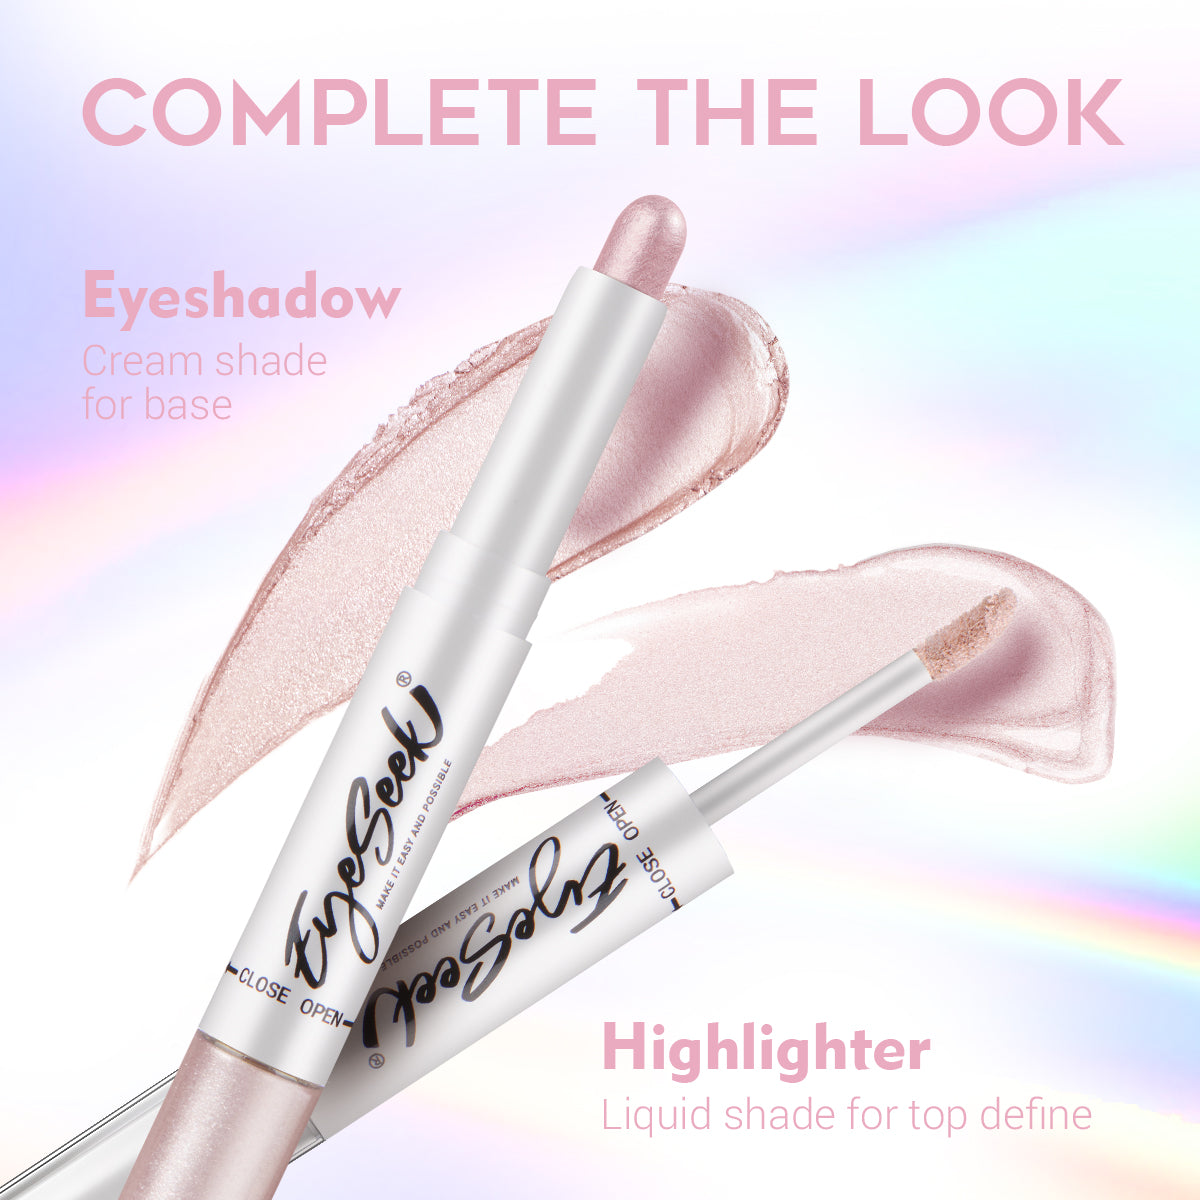 Eyeseek 2 in 1 Eyeshadow and Liquid Glitter Eyeshadow #02 - Champaign Rose